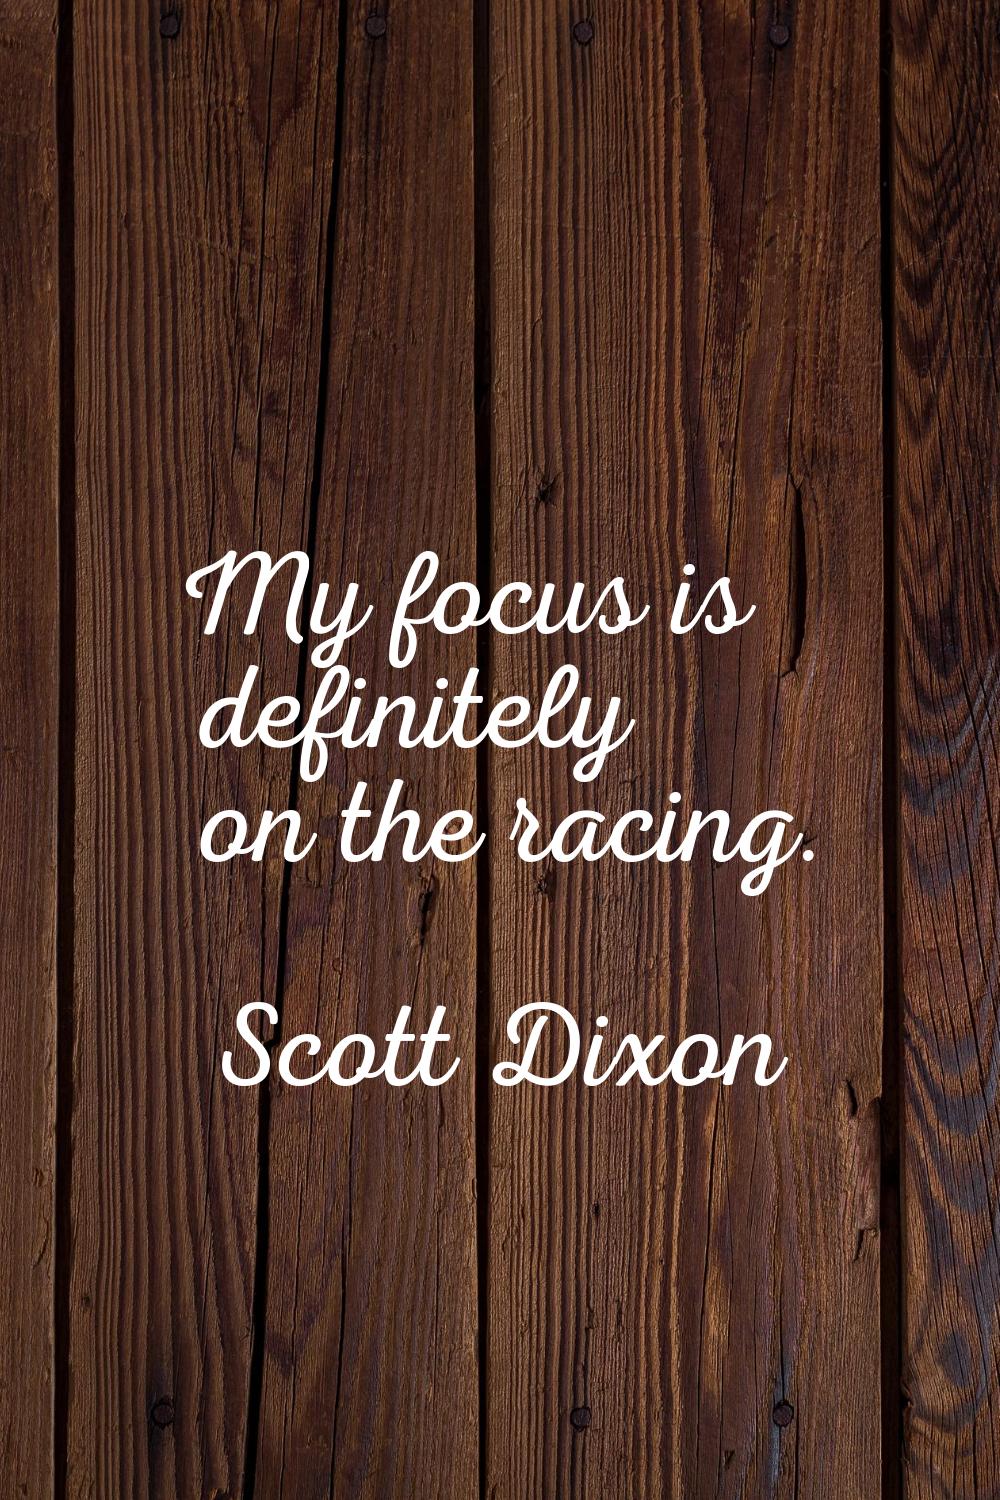 My focus is definitely on the racing.